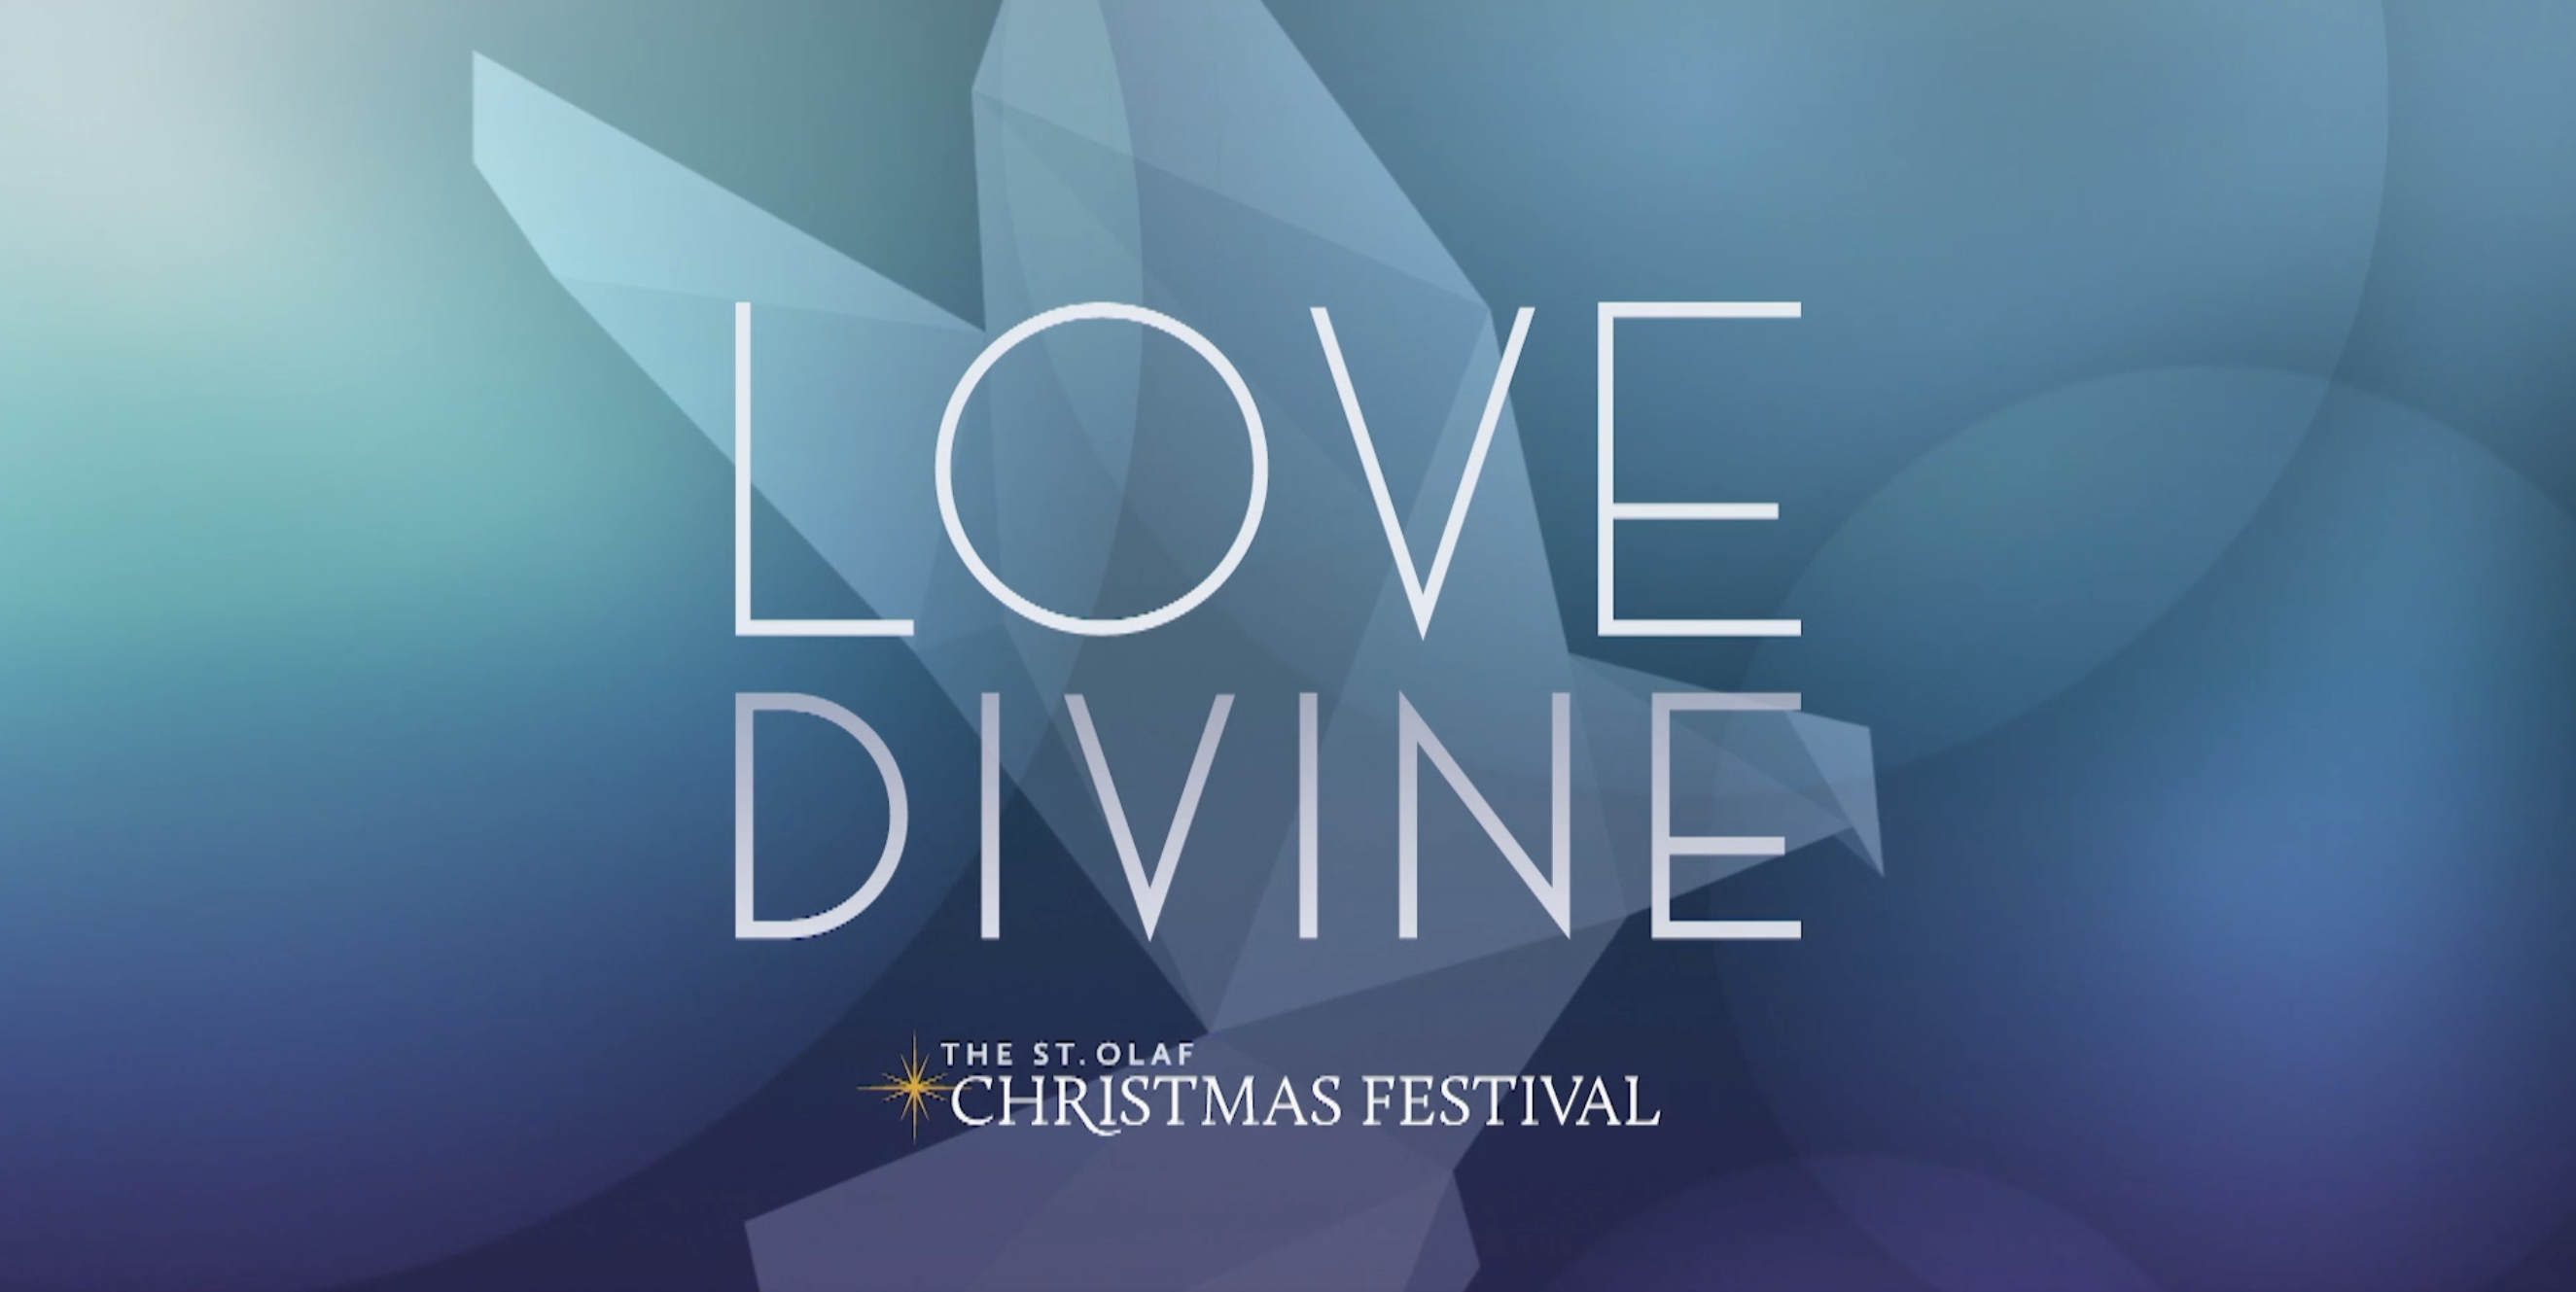 ST. OLAF CHRISTMAS FESTIVAL: LOVE DEVINE